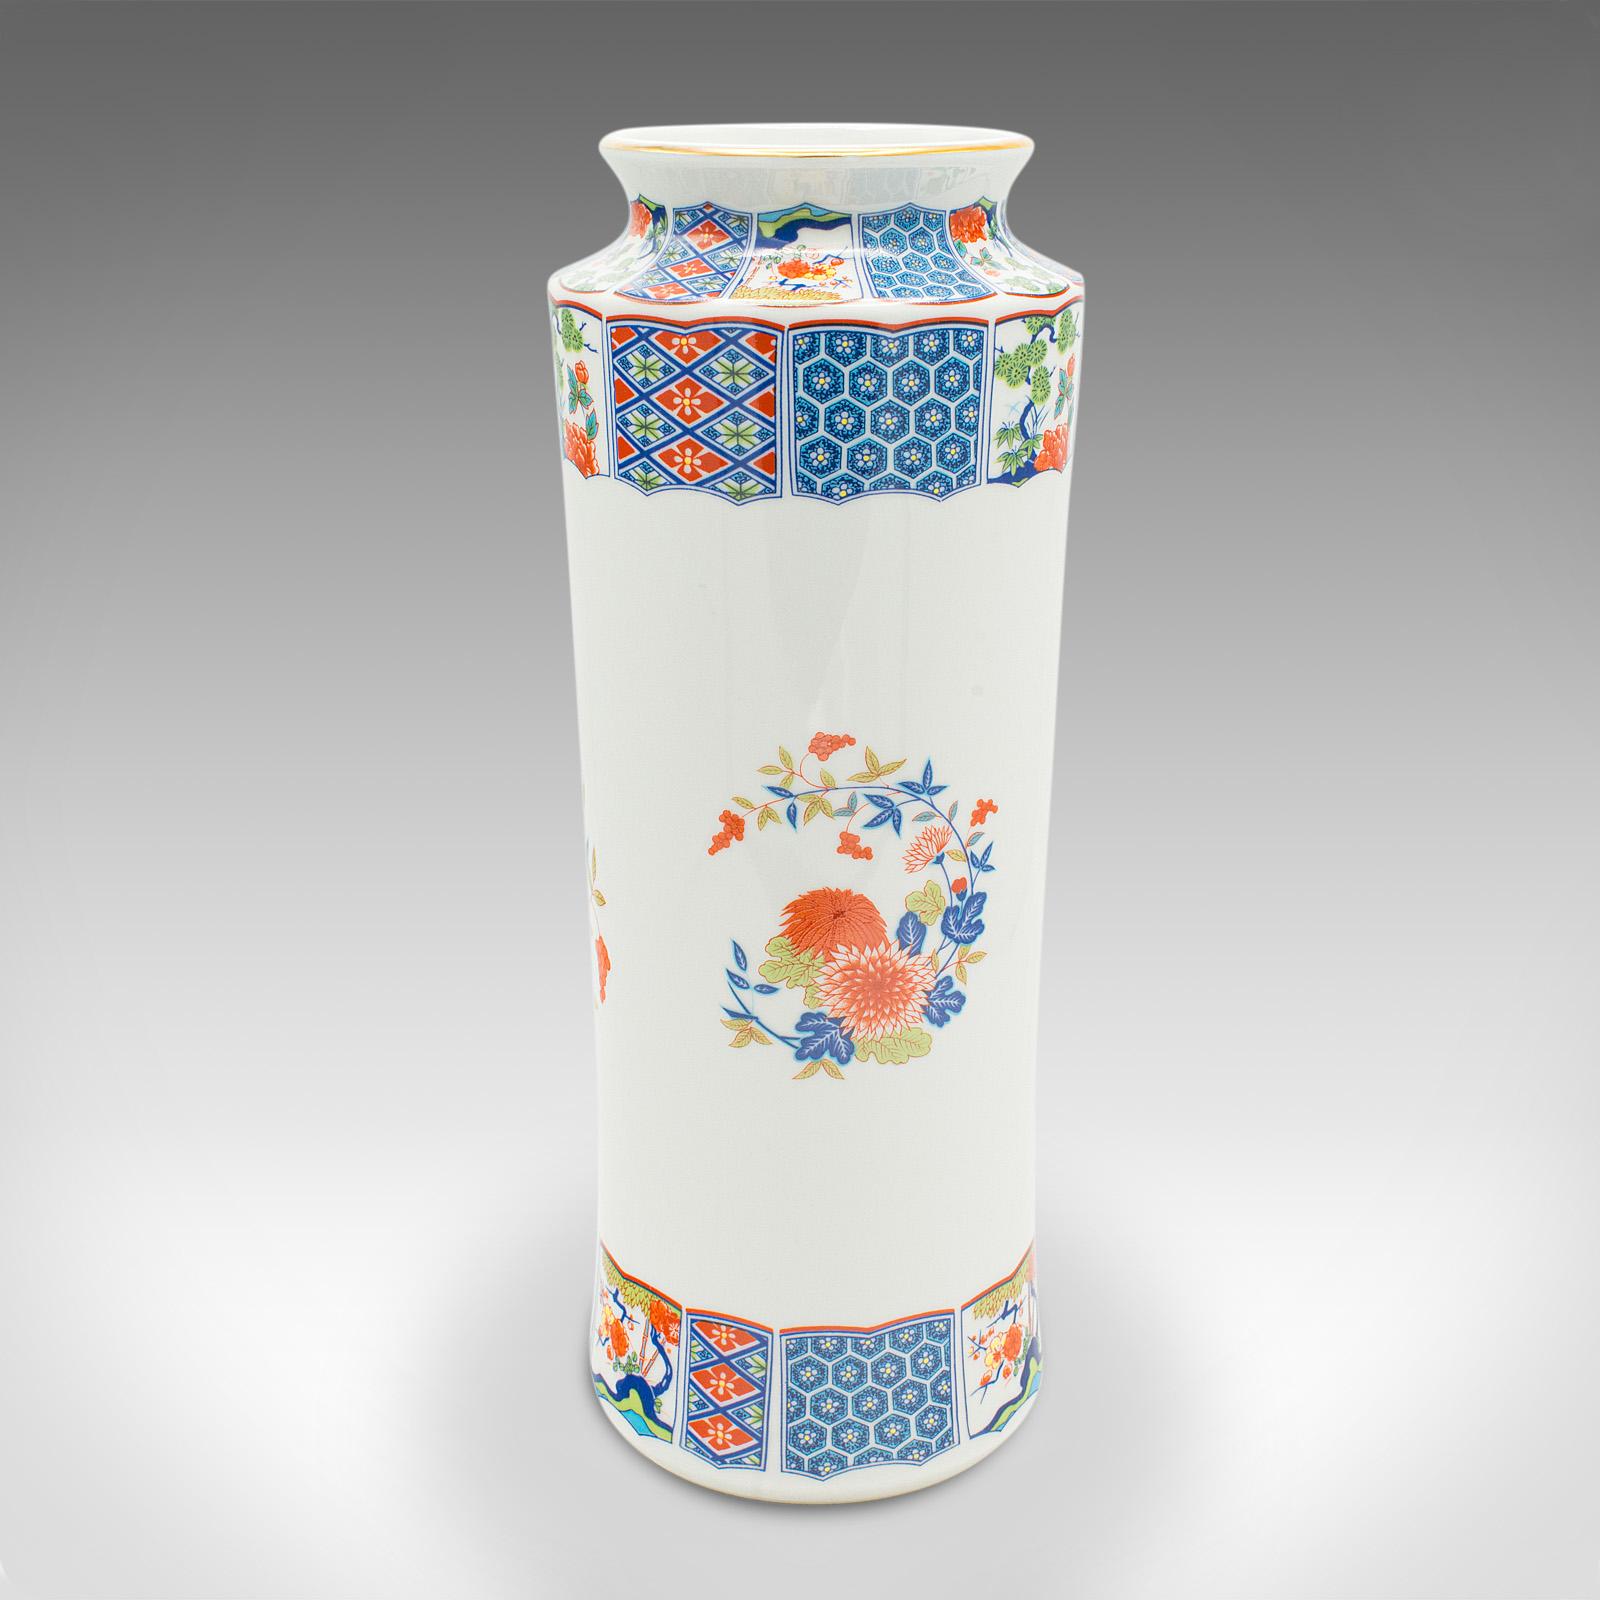 Vintage Decorative Stem Vase, Chinese, Ceramic, Flower Sleeve, Art Deco Revival In Good Condition For Sale In Hele, Devon, GB